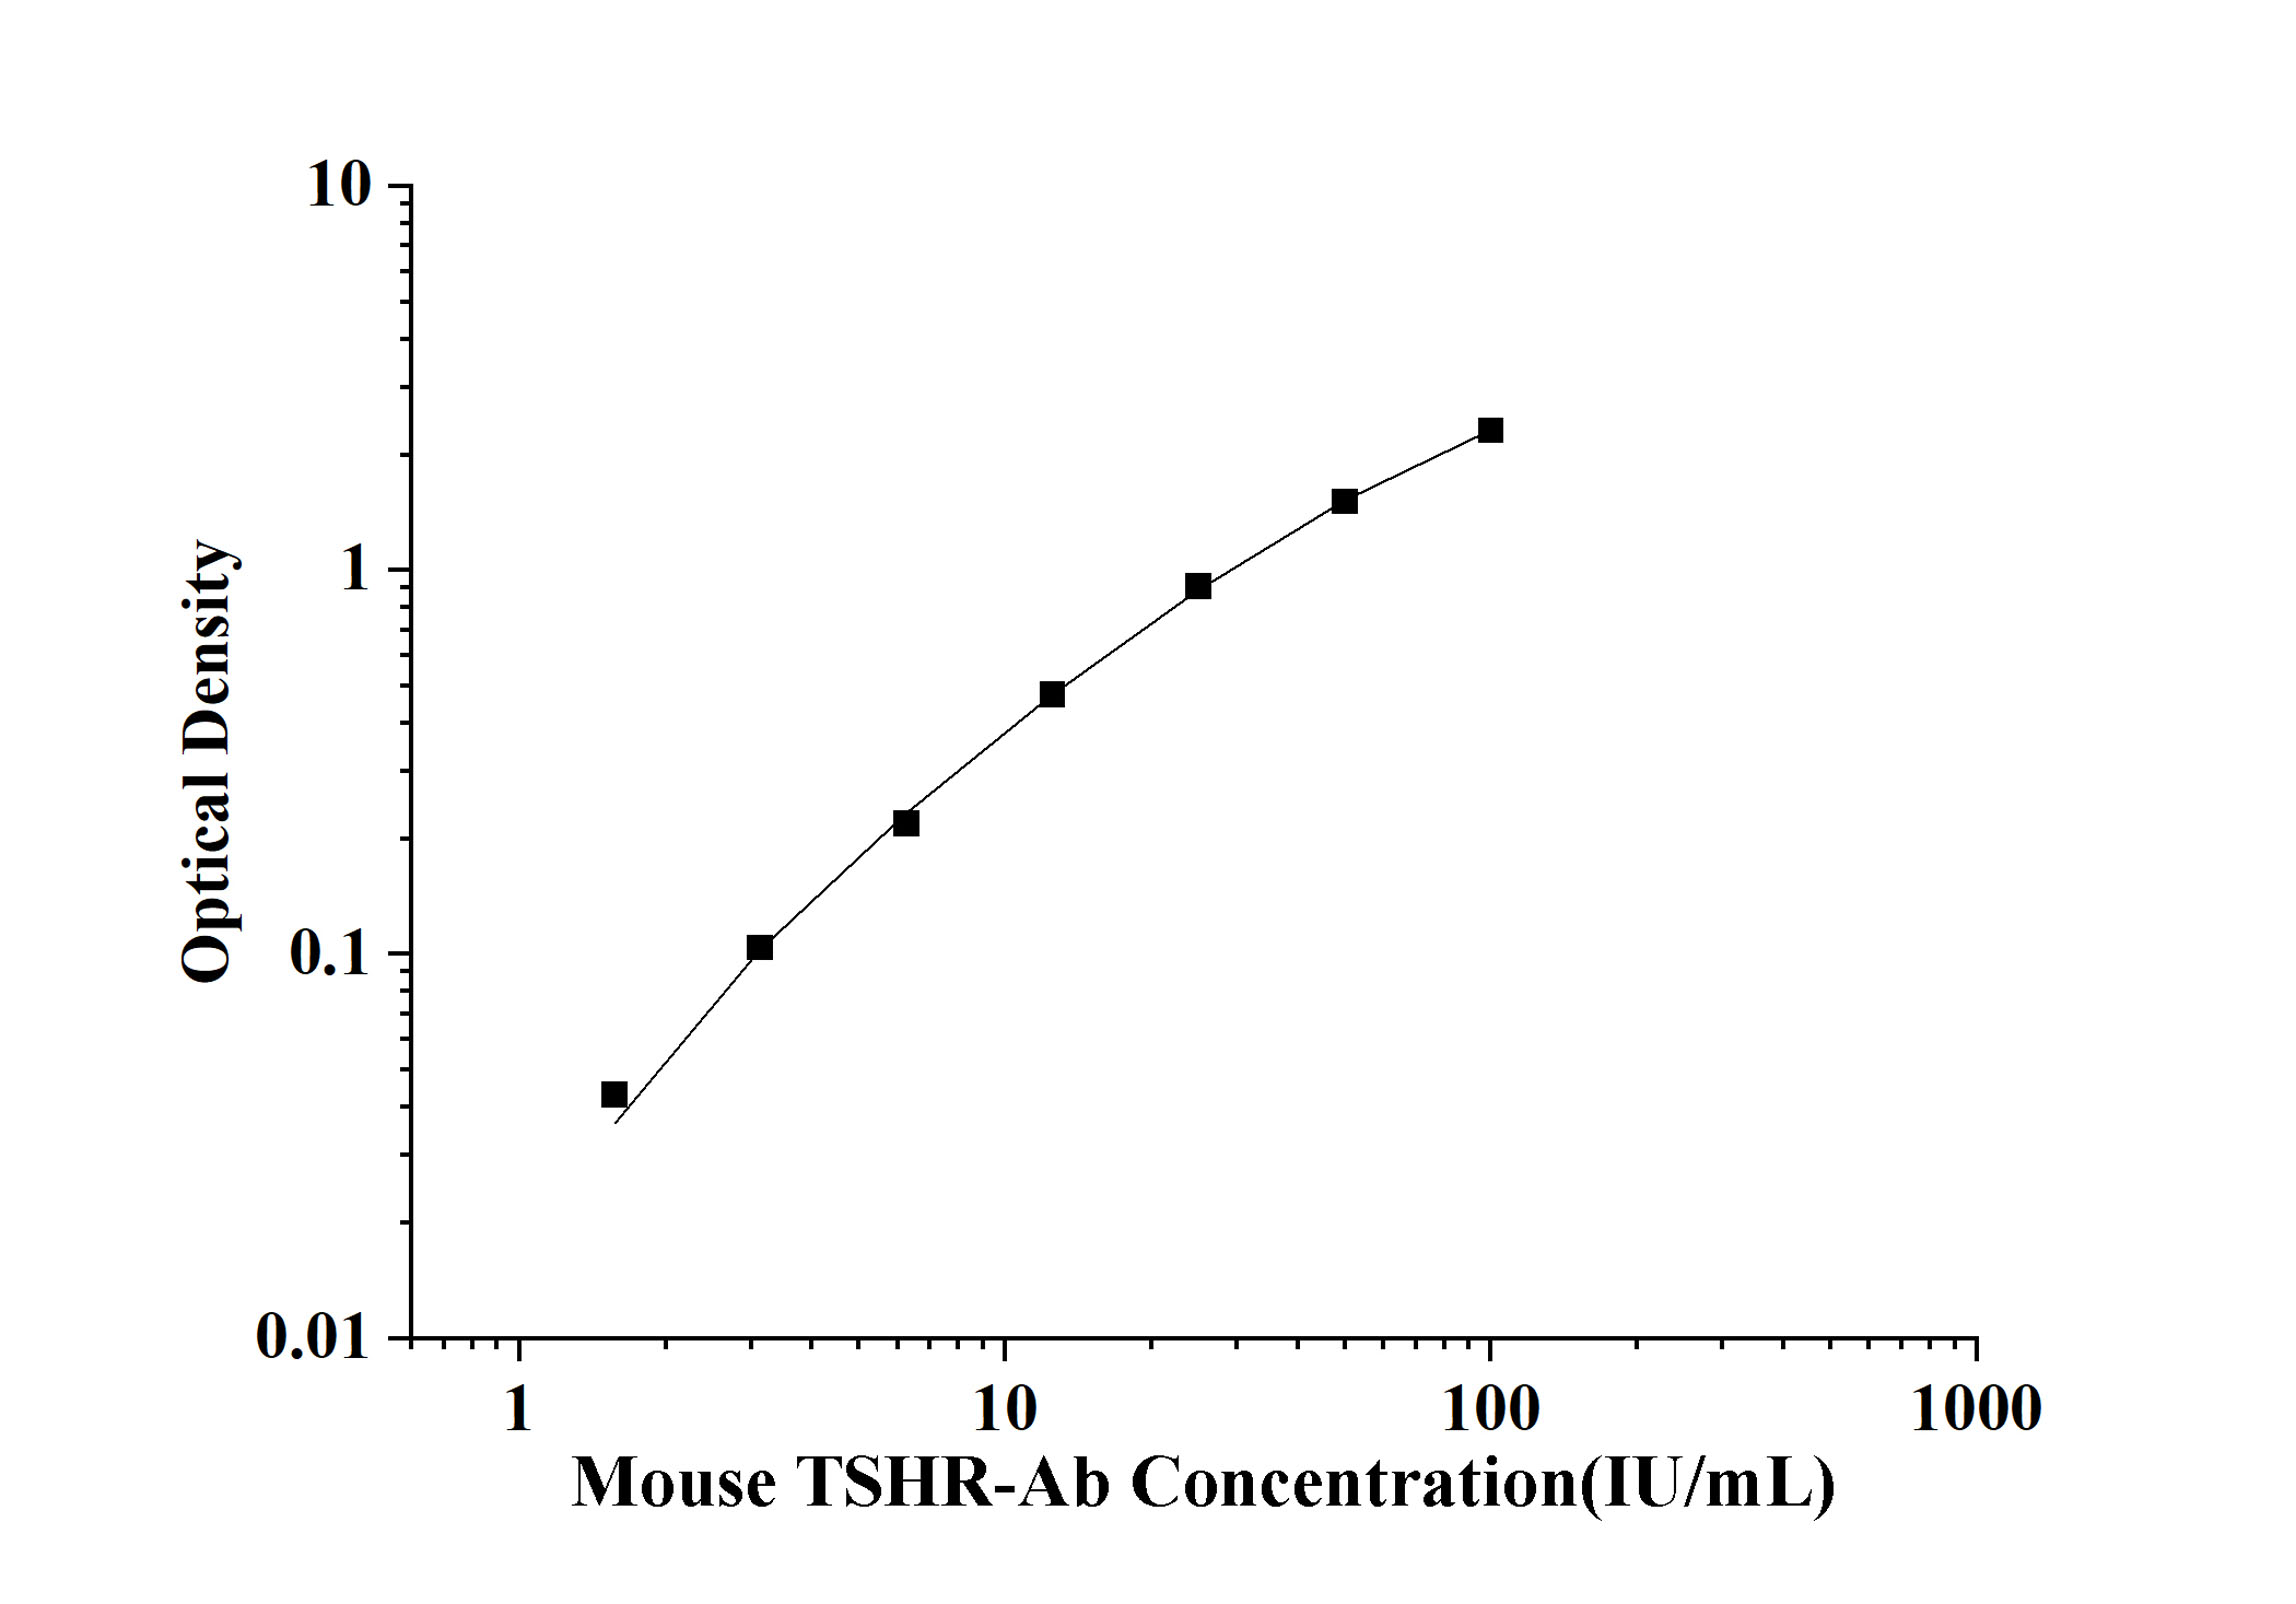 Mouse TSHR-Ab(Thyroid Stimulating Hormone Receptor Antibody) ELISA Kit